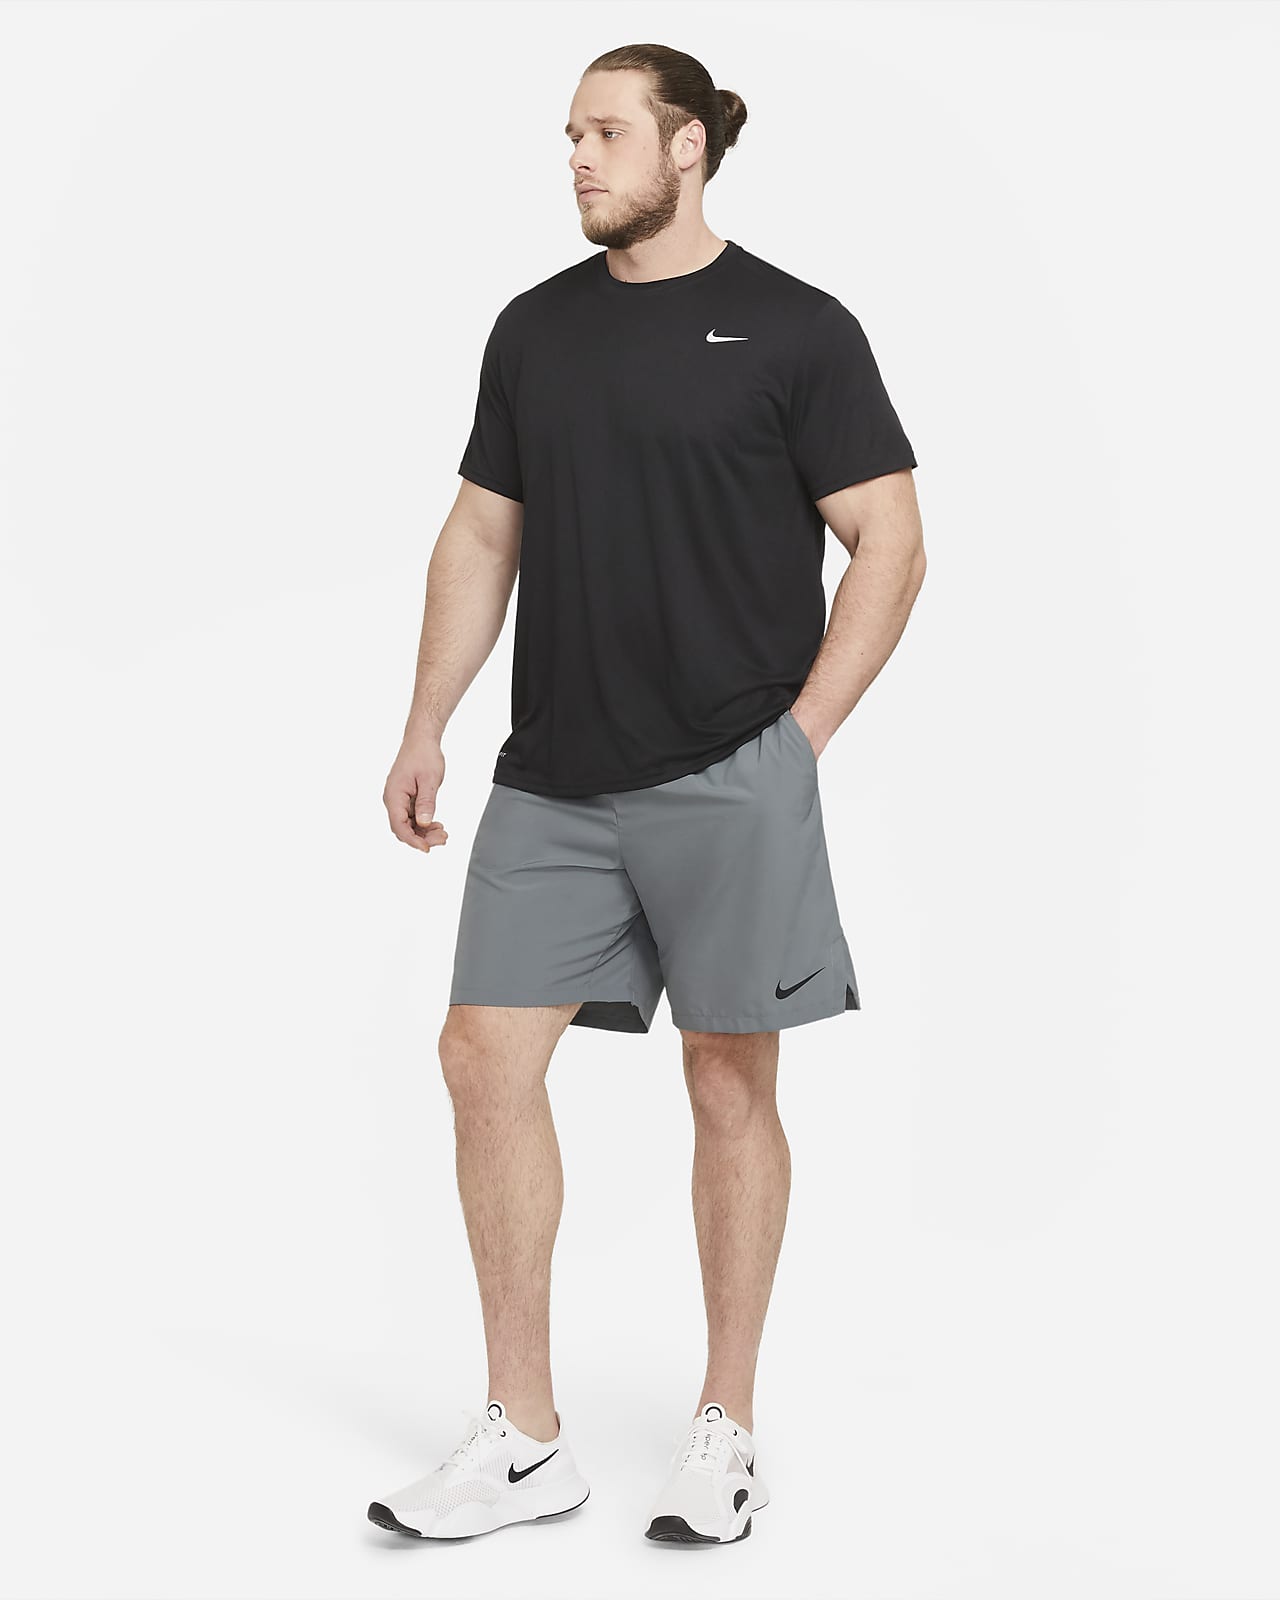 nike flex men's woven training shorts